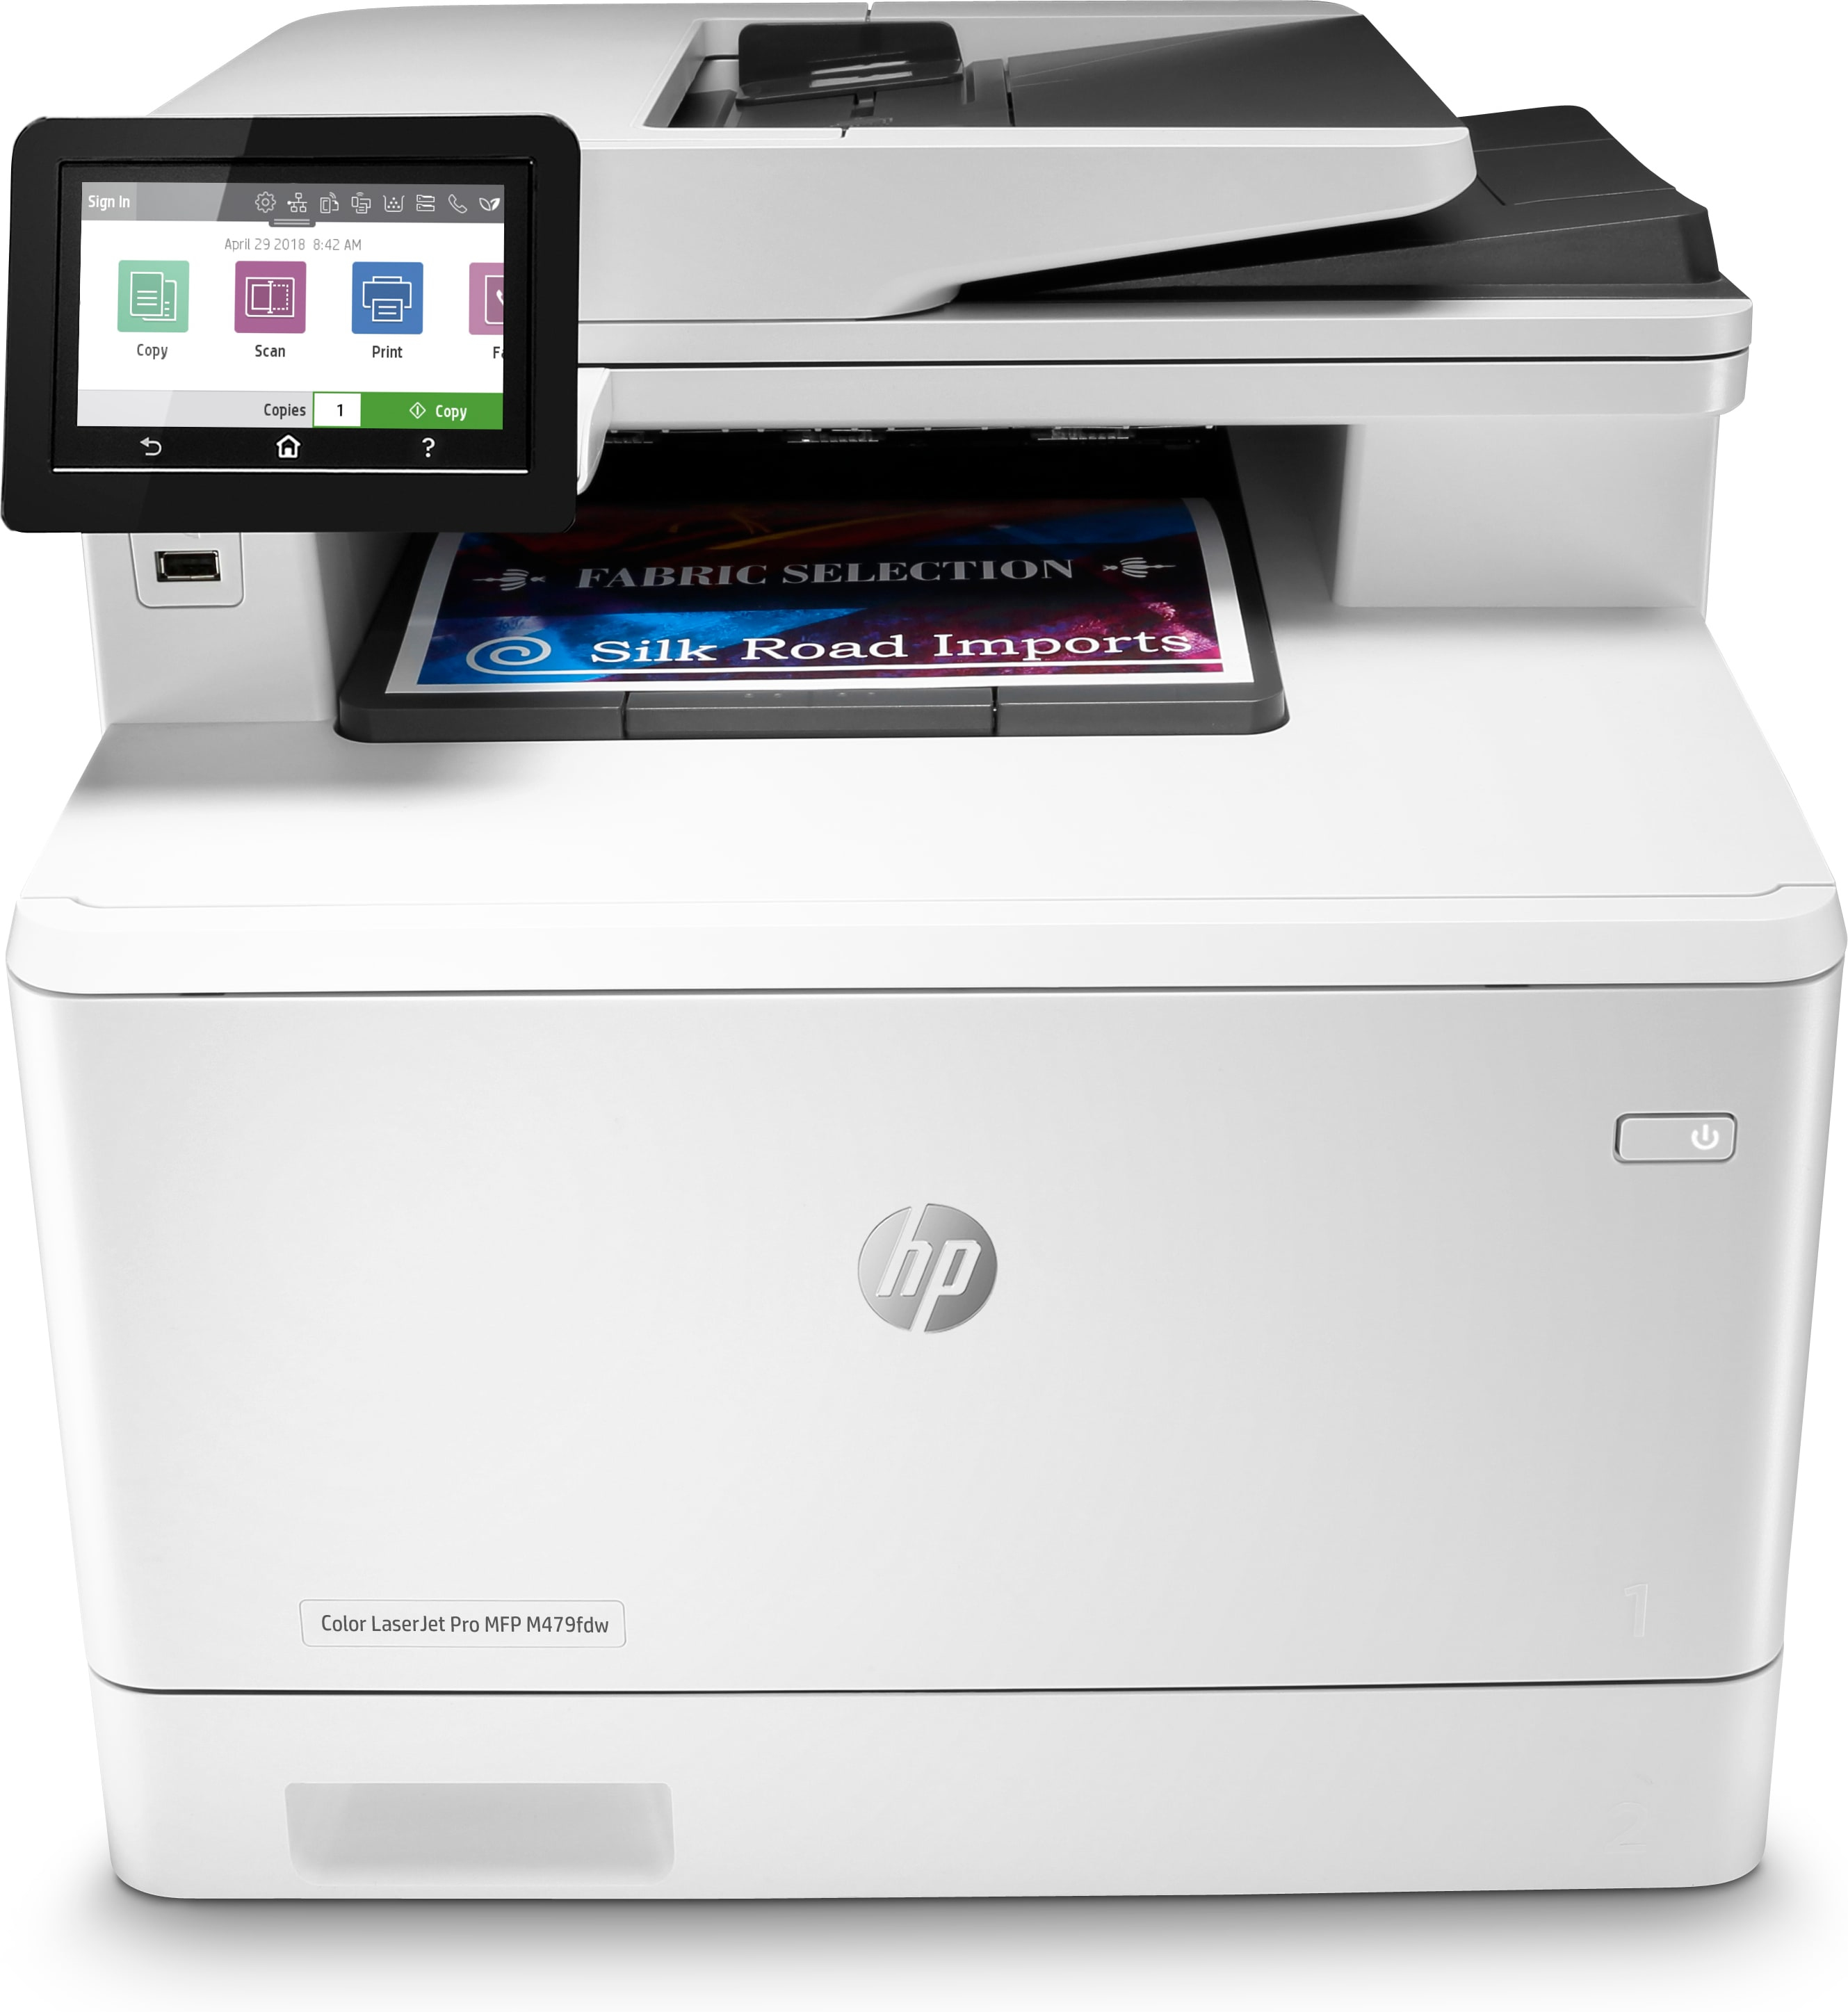 Impresora Color Hp laserjet pro m479fdw wifi copia escanea fax 600 x dpi usb w1a80a imprime y ethernet 2.0 de alta velocidad 1 host smart 28 a4